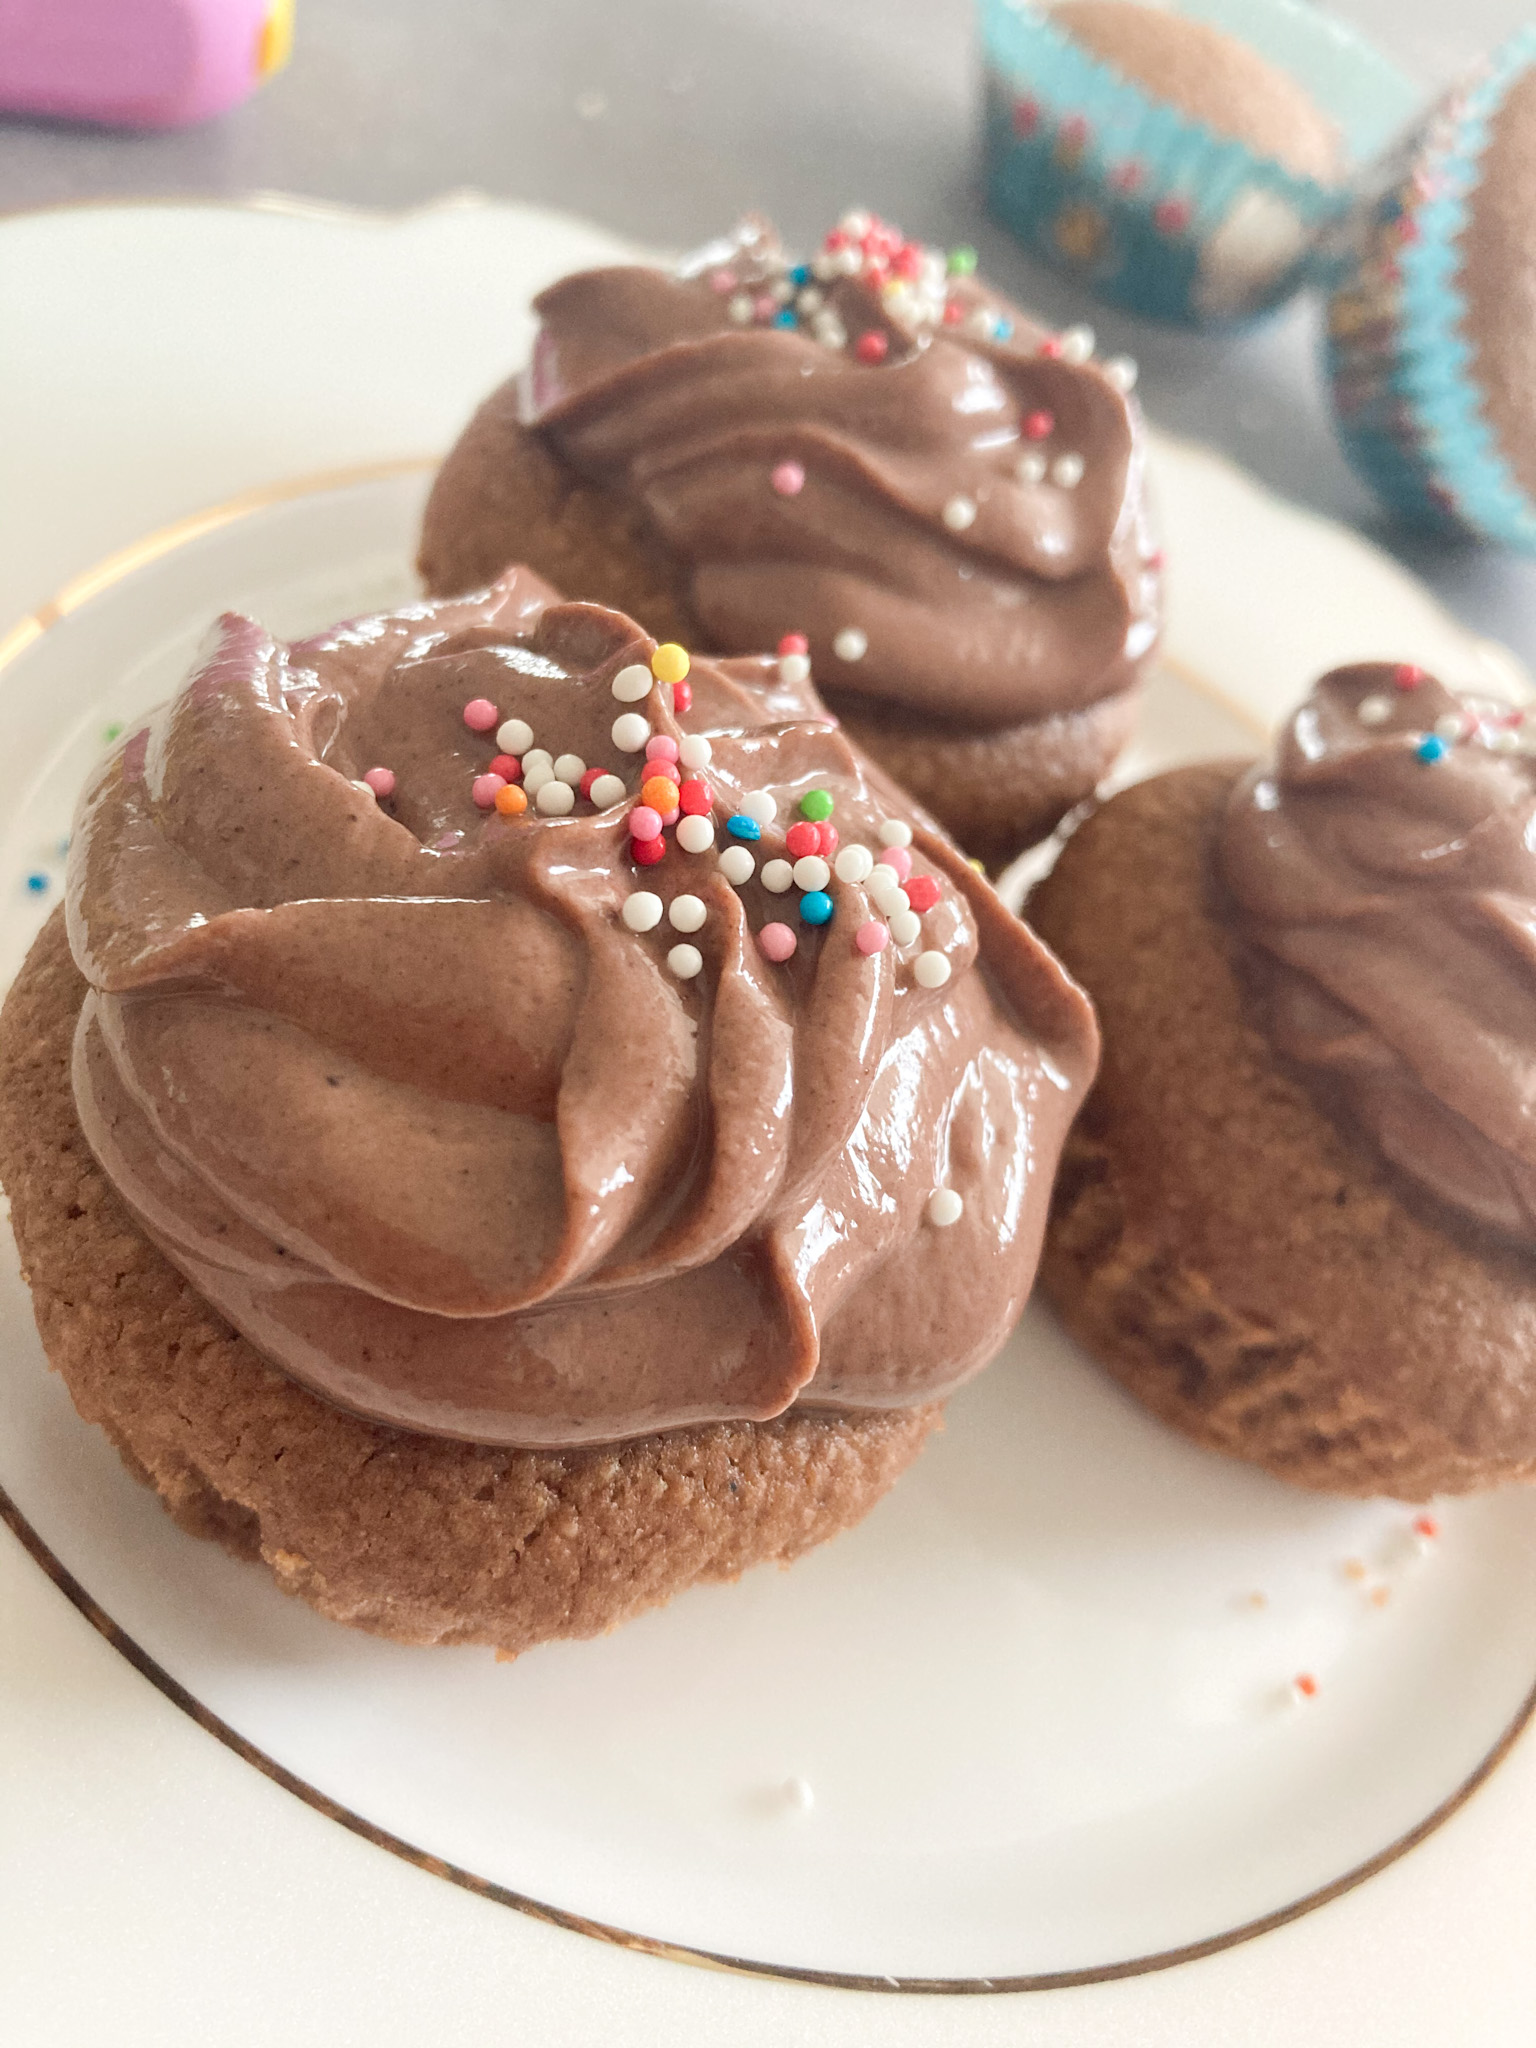 Kokos Cupcakes mit Quark Topping - Die kleinen Feinschmecker